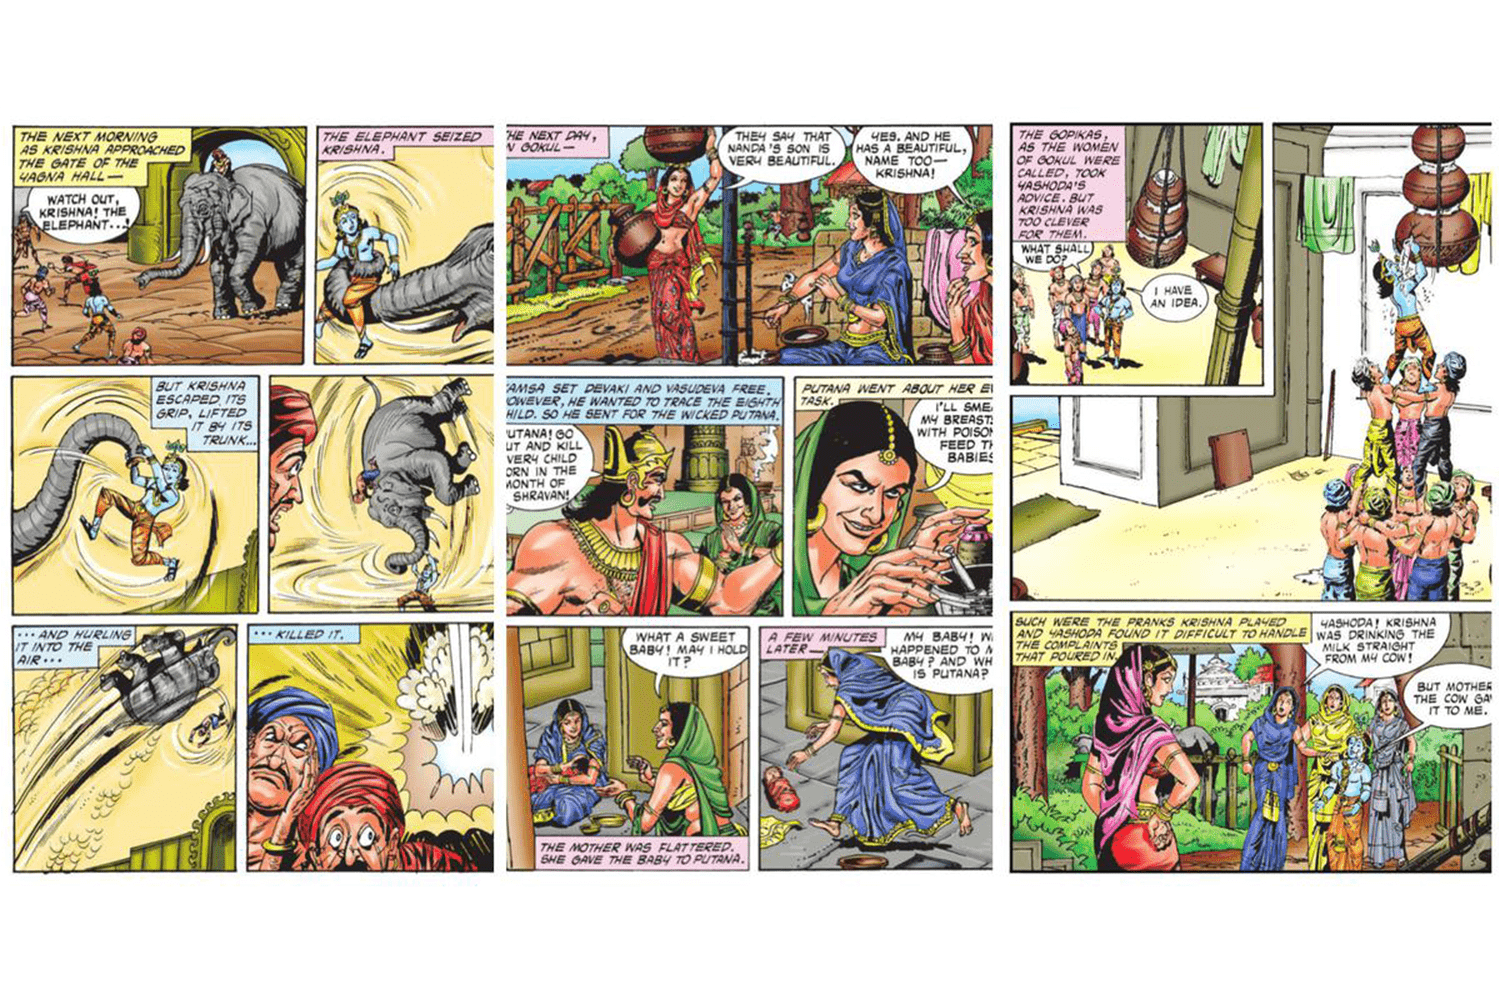 Indian Comic